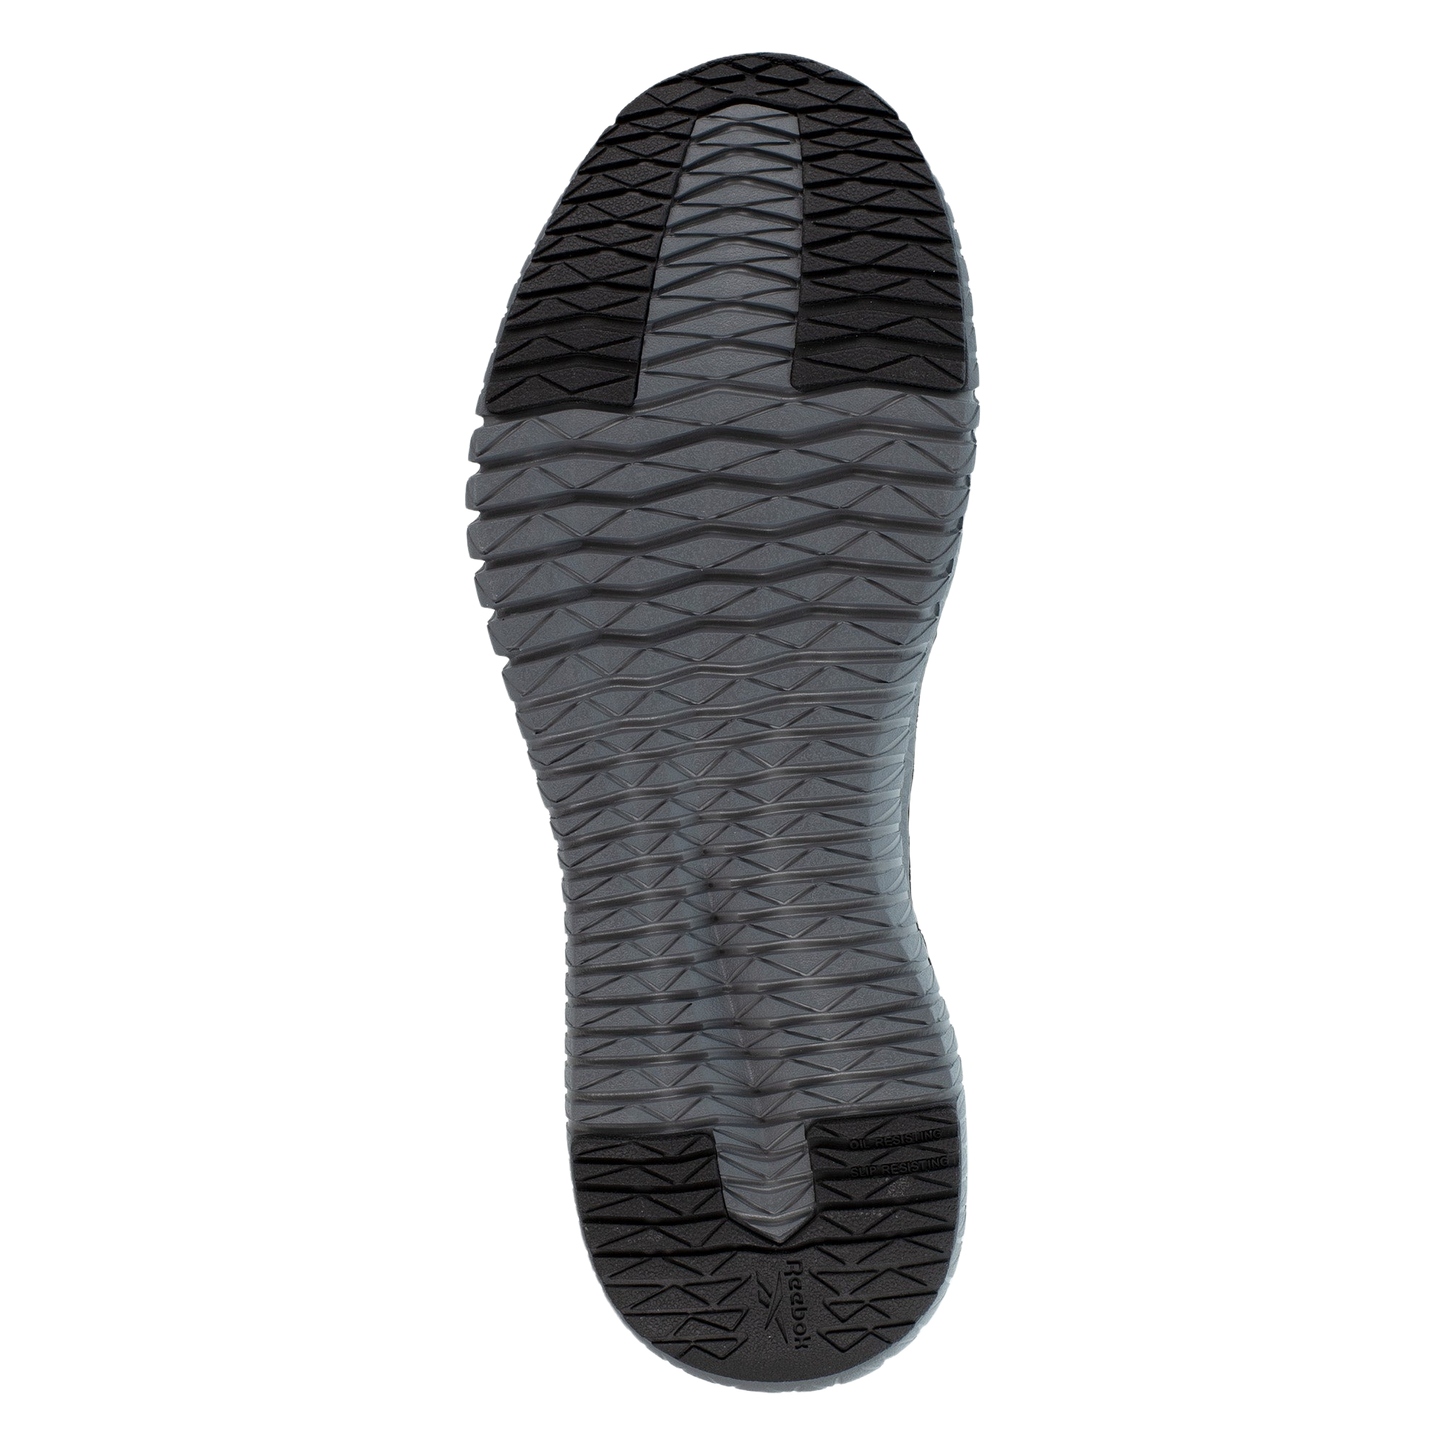 Reebok Men's Flexagon 3.0 Composite Toe Athletic Work Shoes RB4064